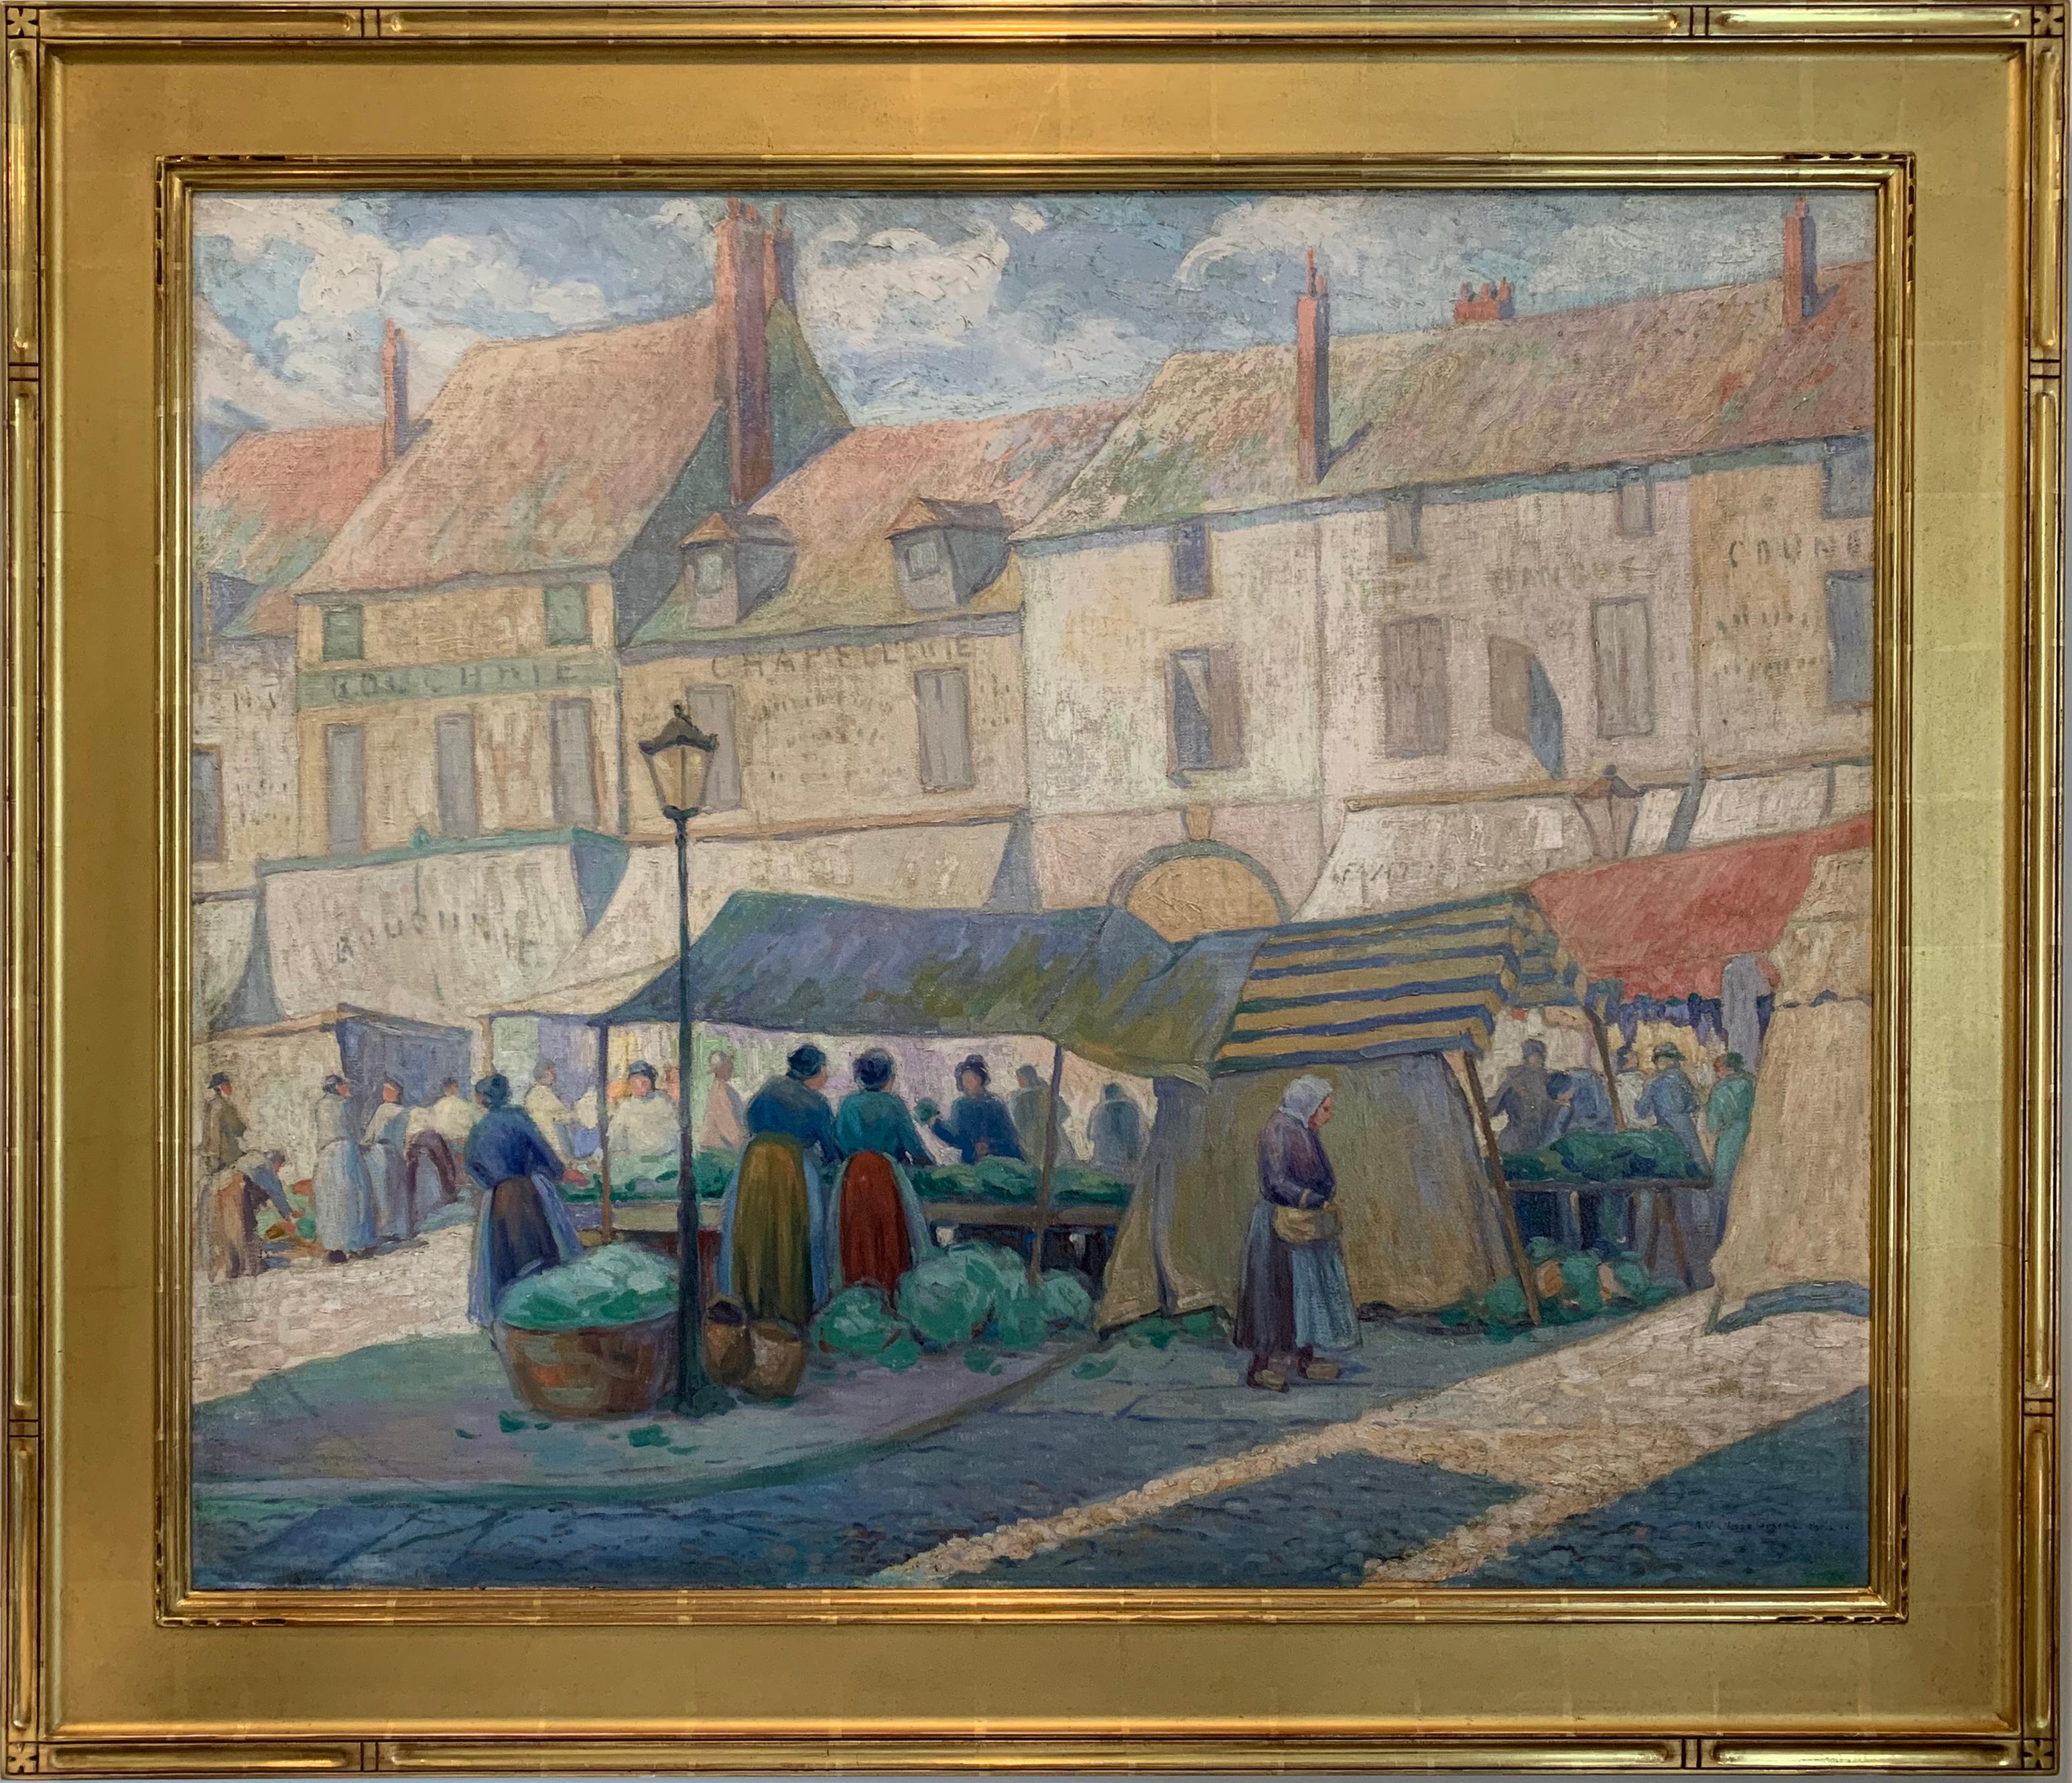 Parisian Market, European Town Scene with Figures, American Impressionist, 1922